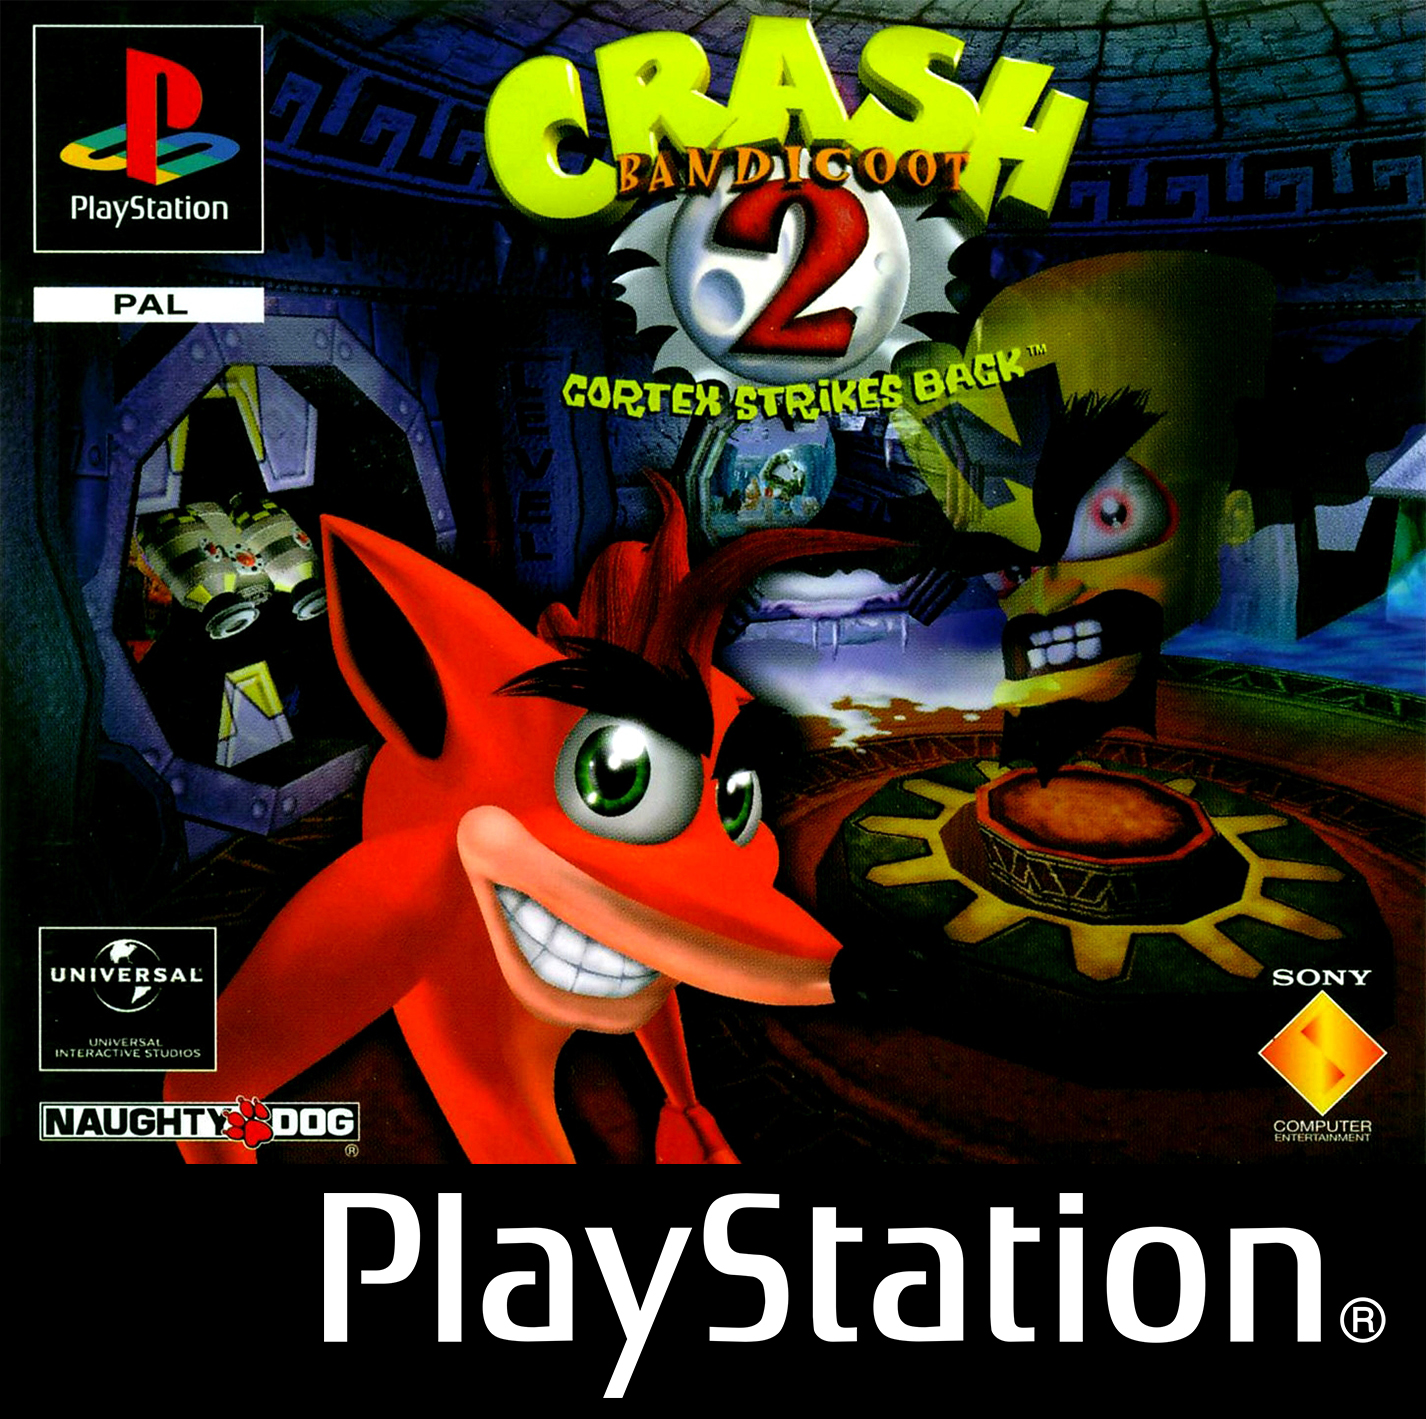 Crash Bandicoot Remaster Dev Talks Remaking Classic Games - GameSpot